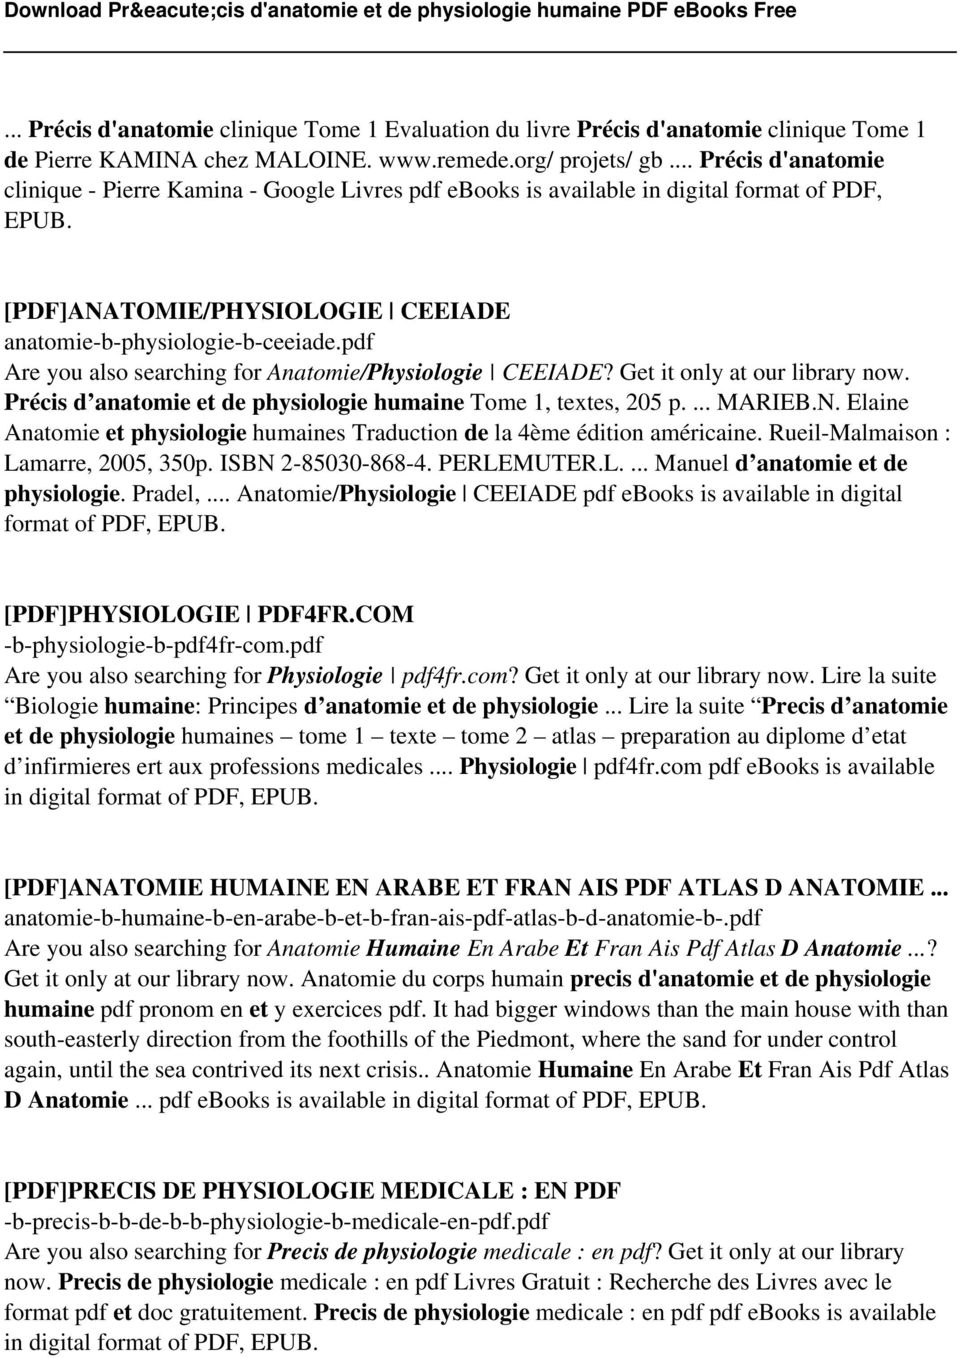 physiologie humaine sherwood pdf gratuit